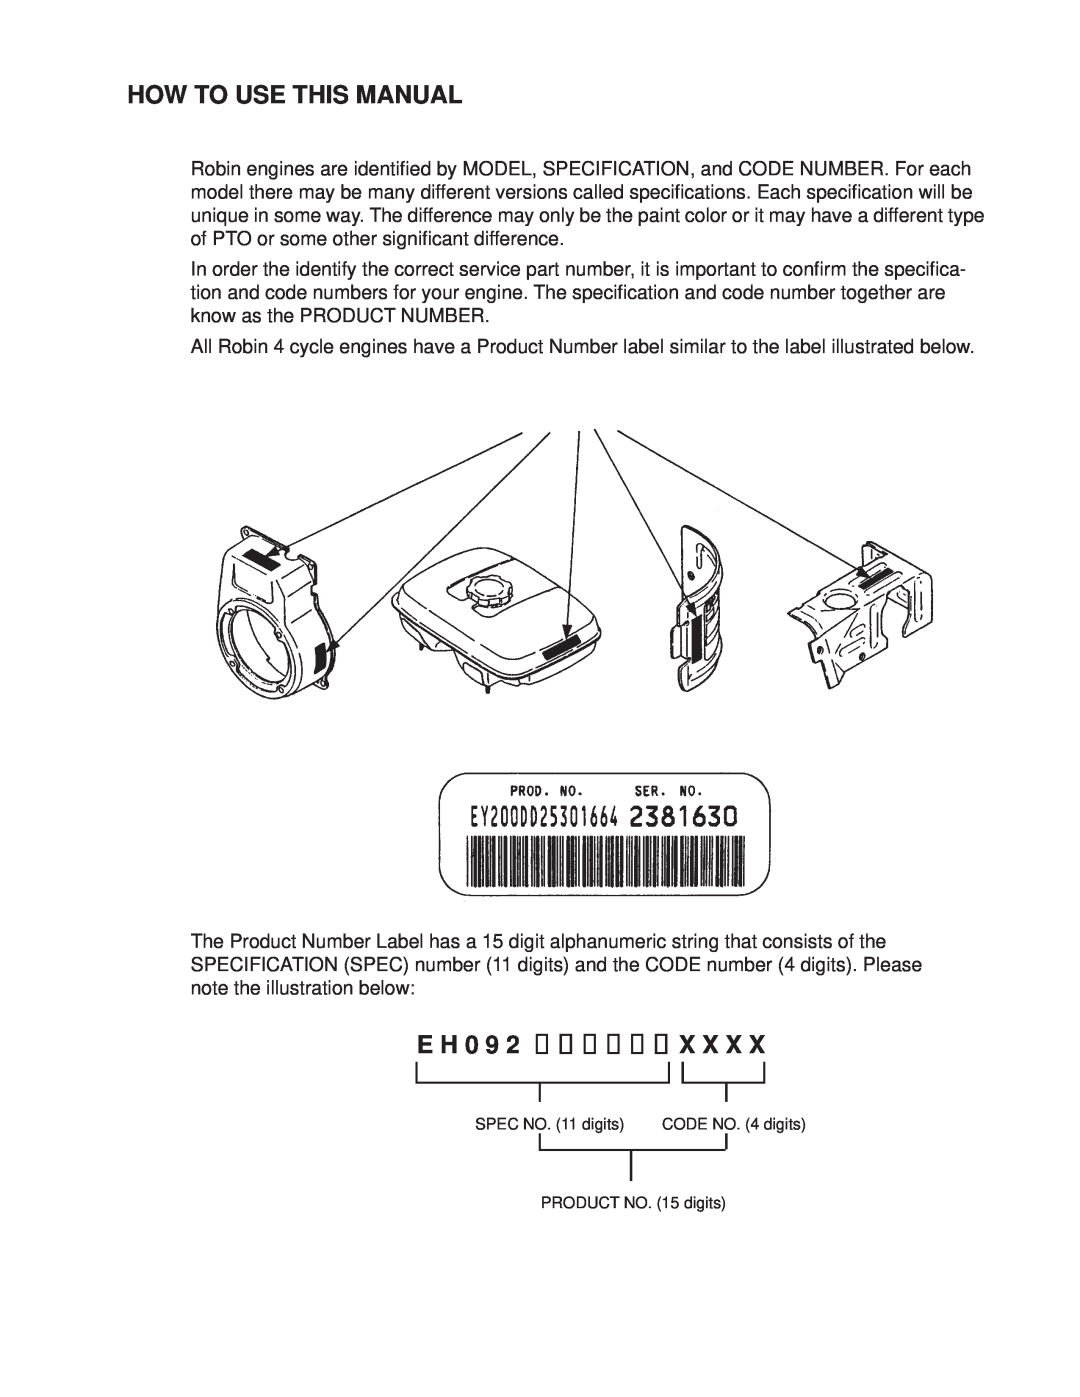 Subaru Robin Power Products PUB-GP6050 manual How To Use This Manual, E H 0 9 2 